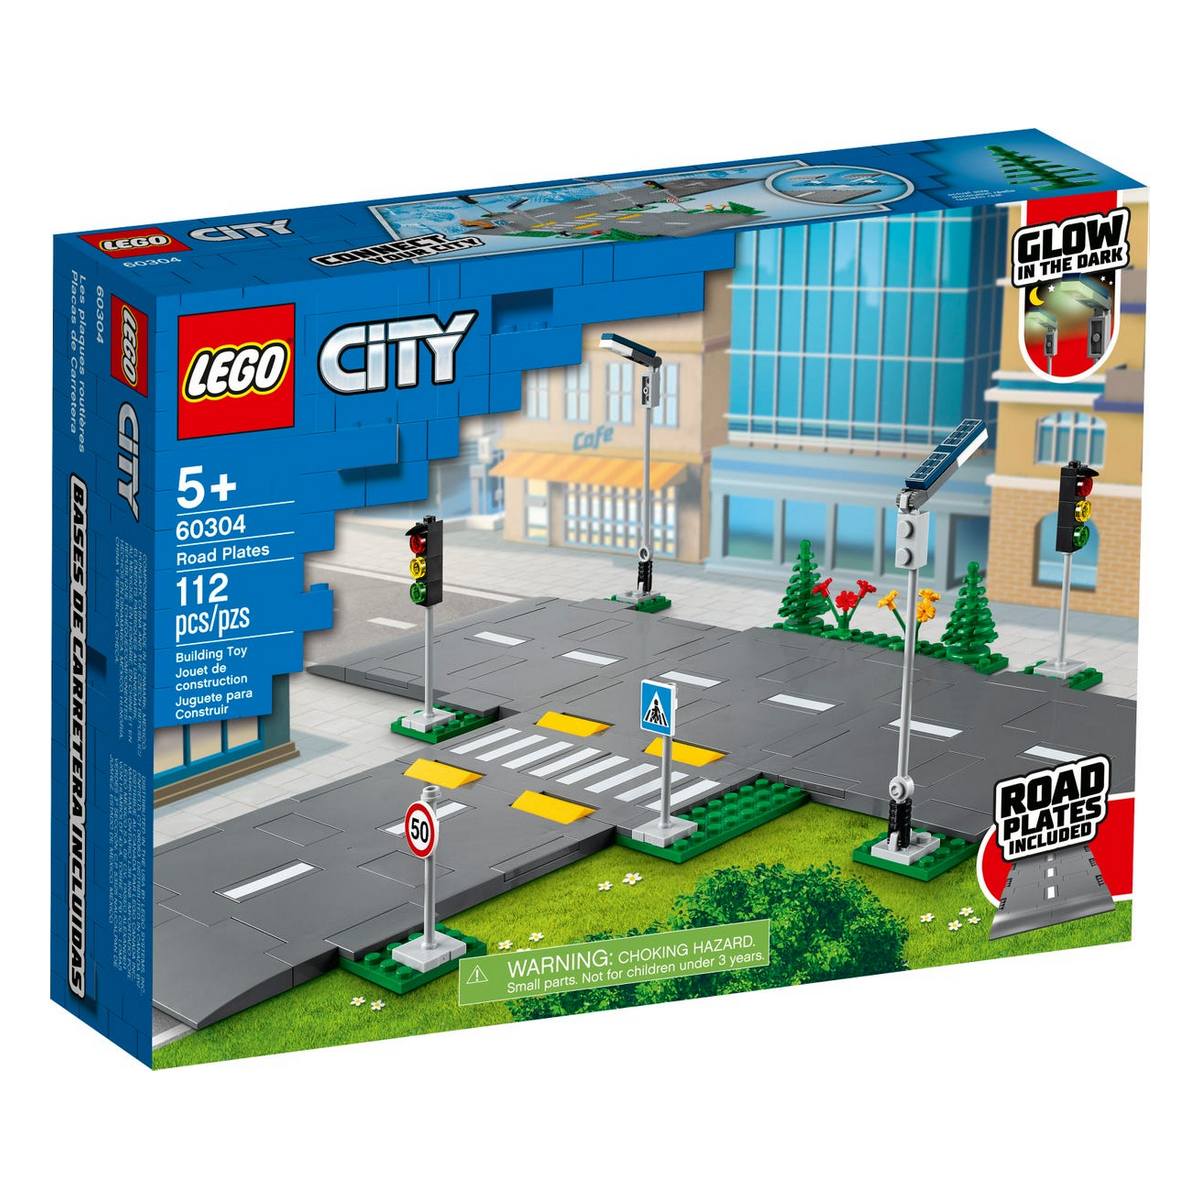 LEGO CITY KRIZOVATKA /60304/